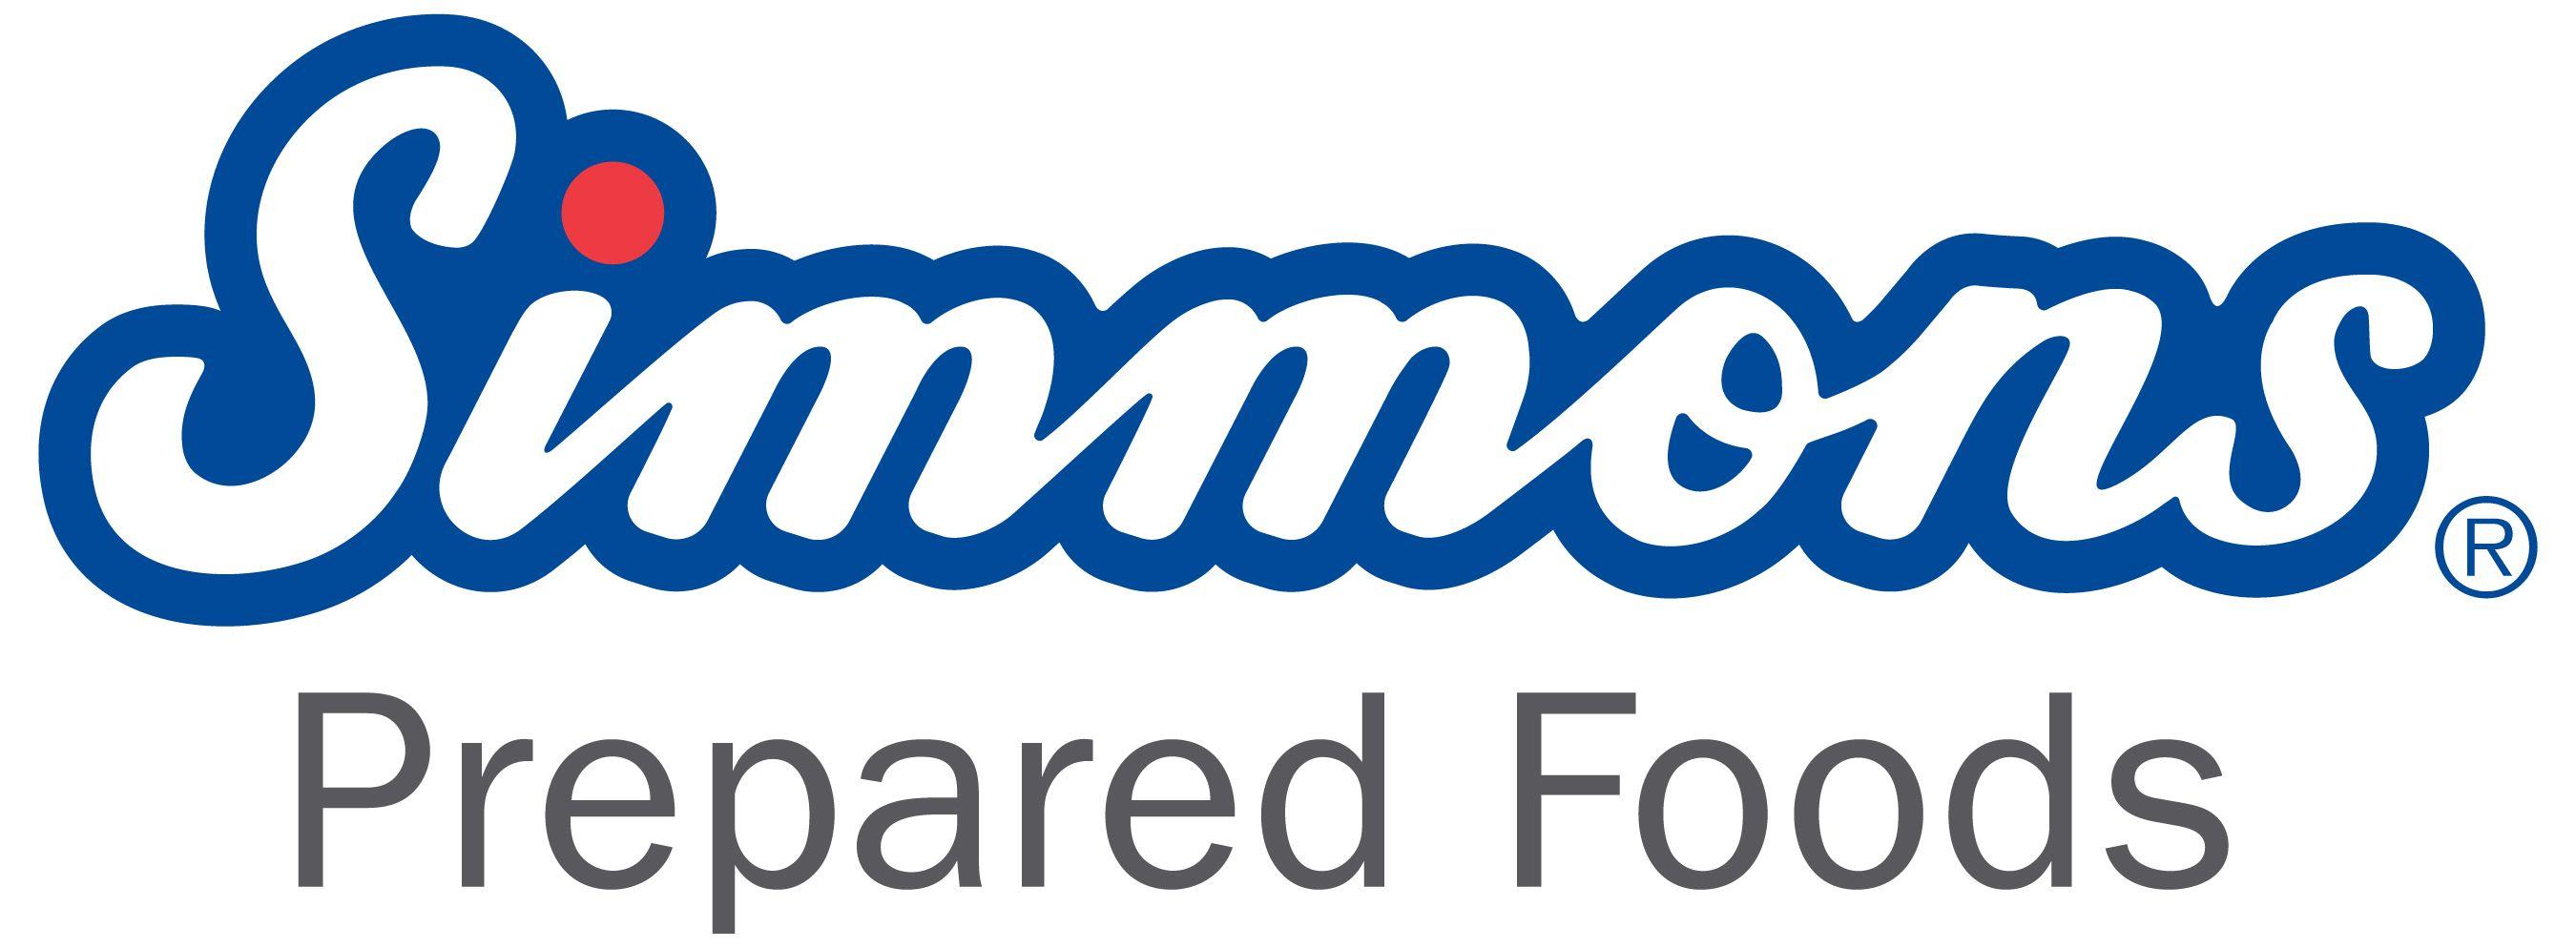 Blue Oval Food Logo - Simmons Branding